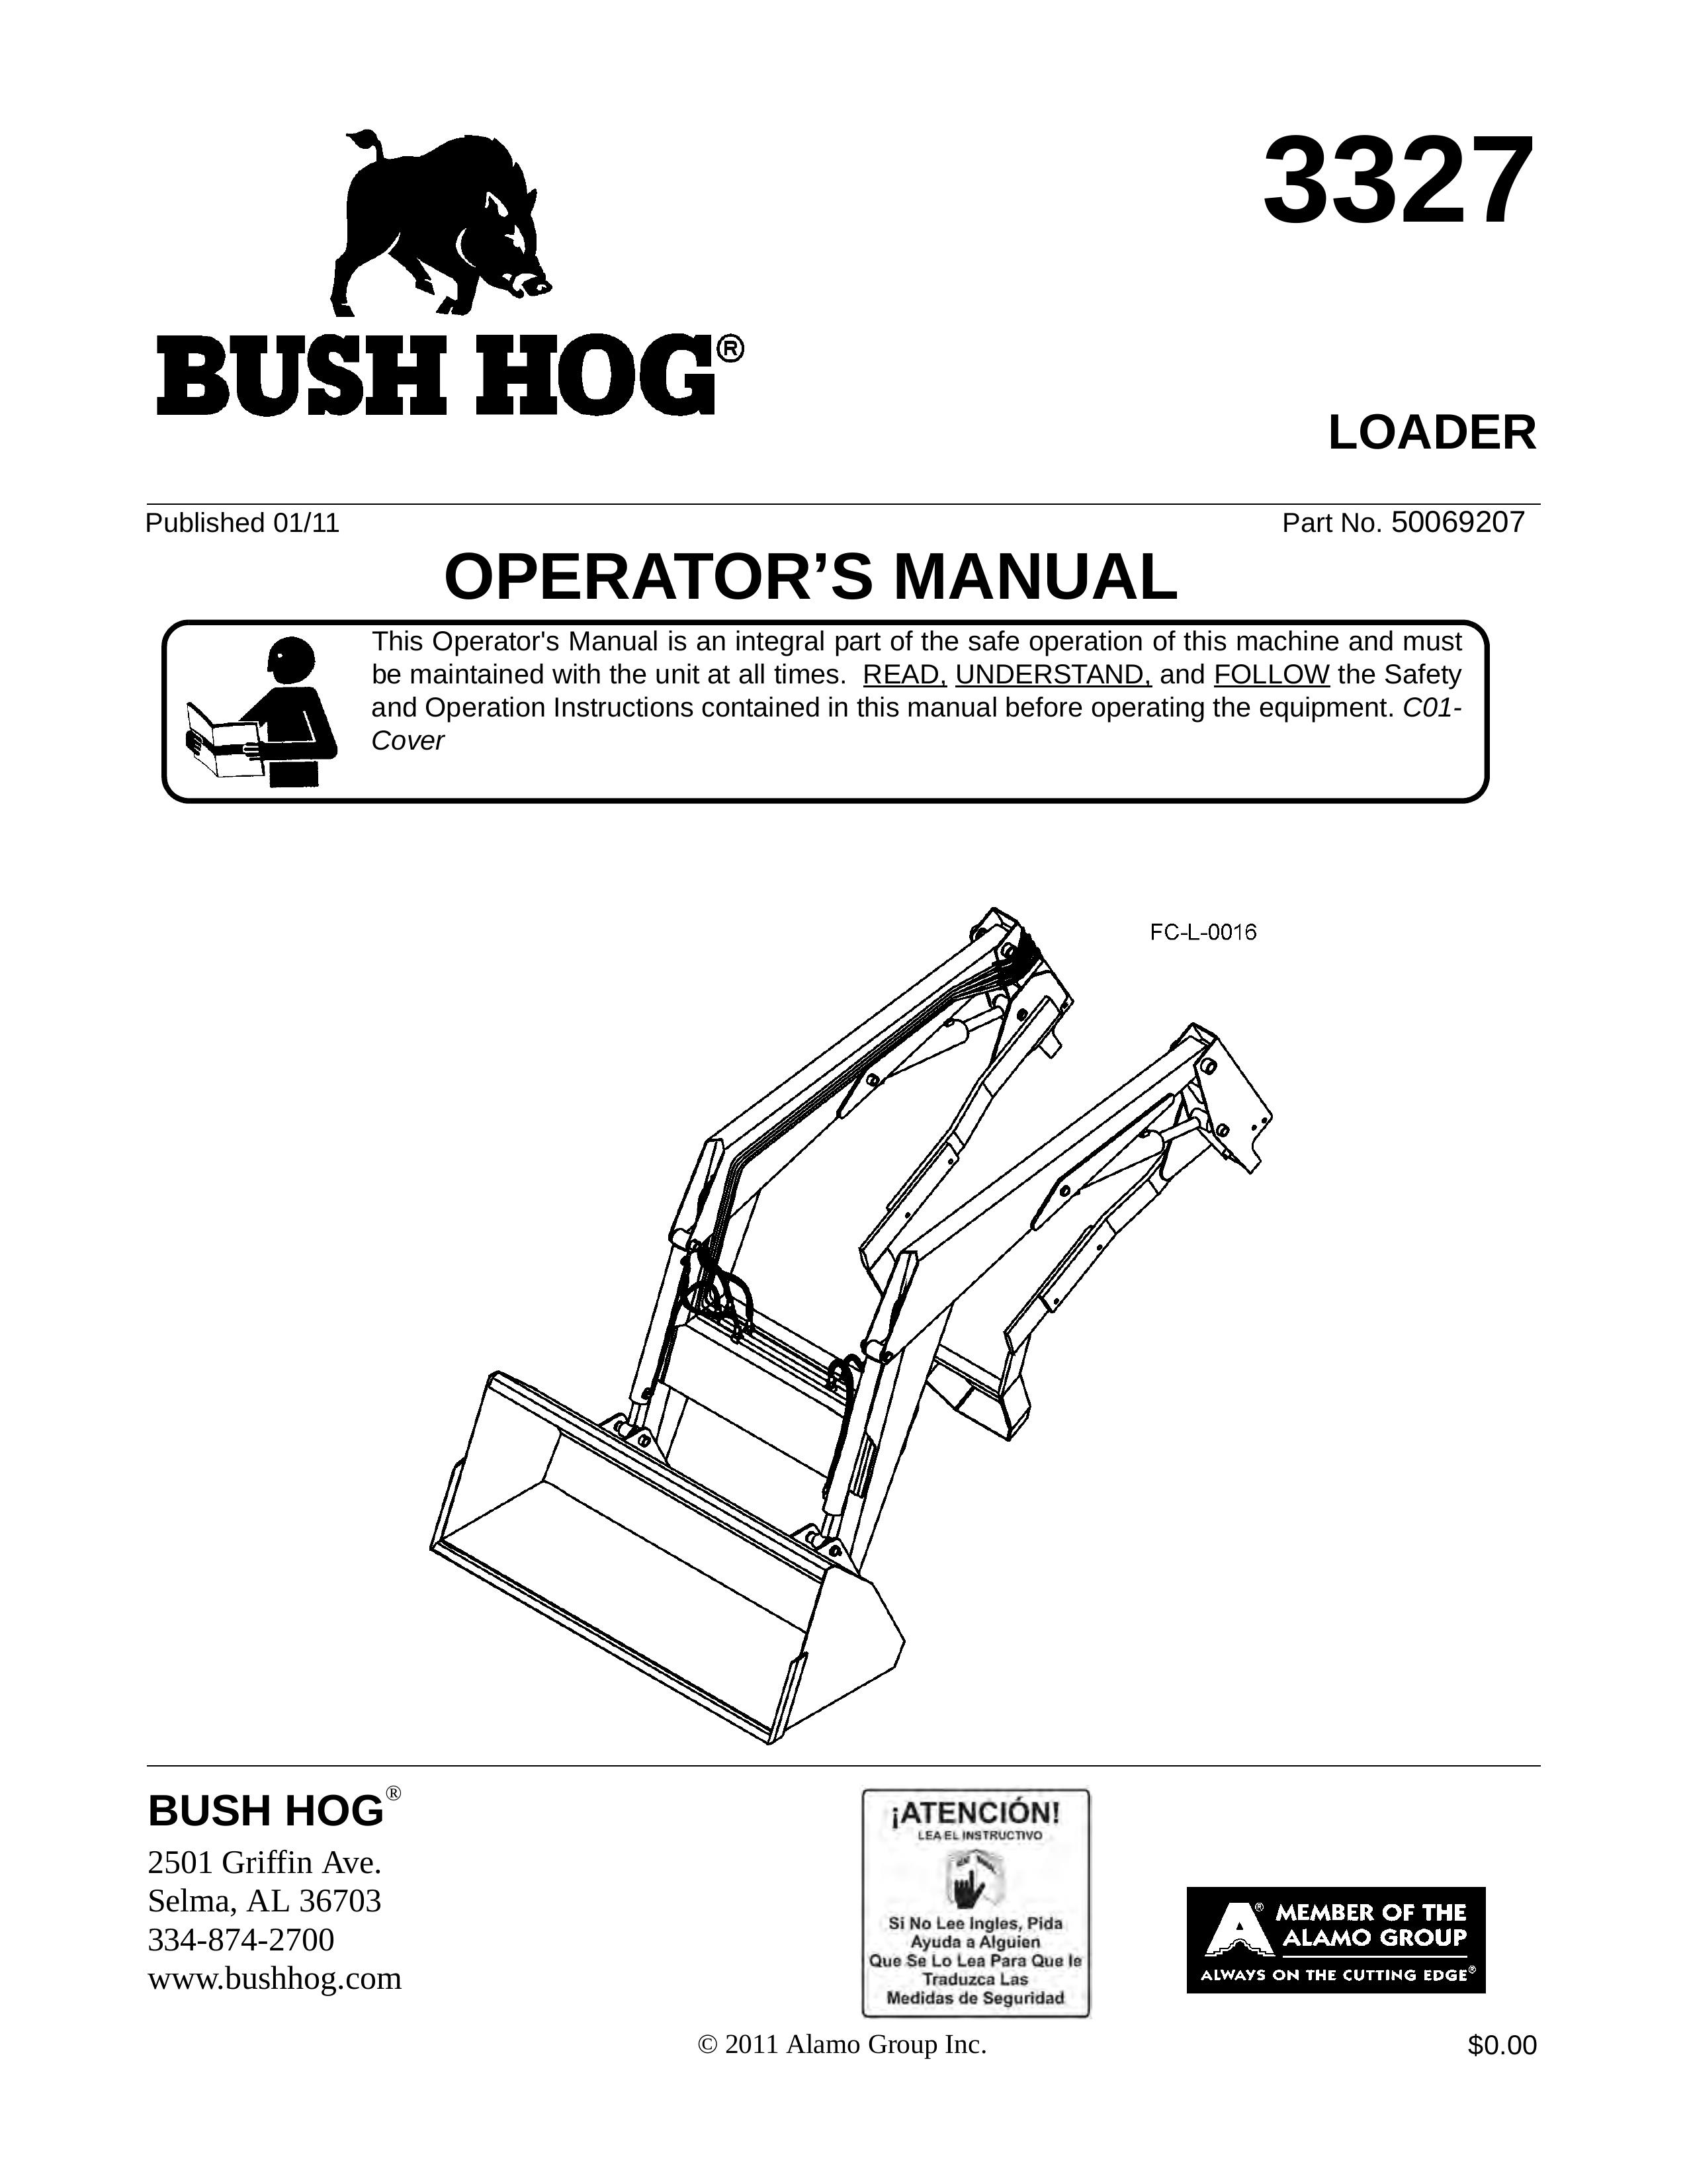 Bush Hog 3327 Compact Loader User Manual